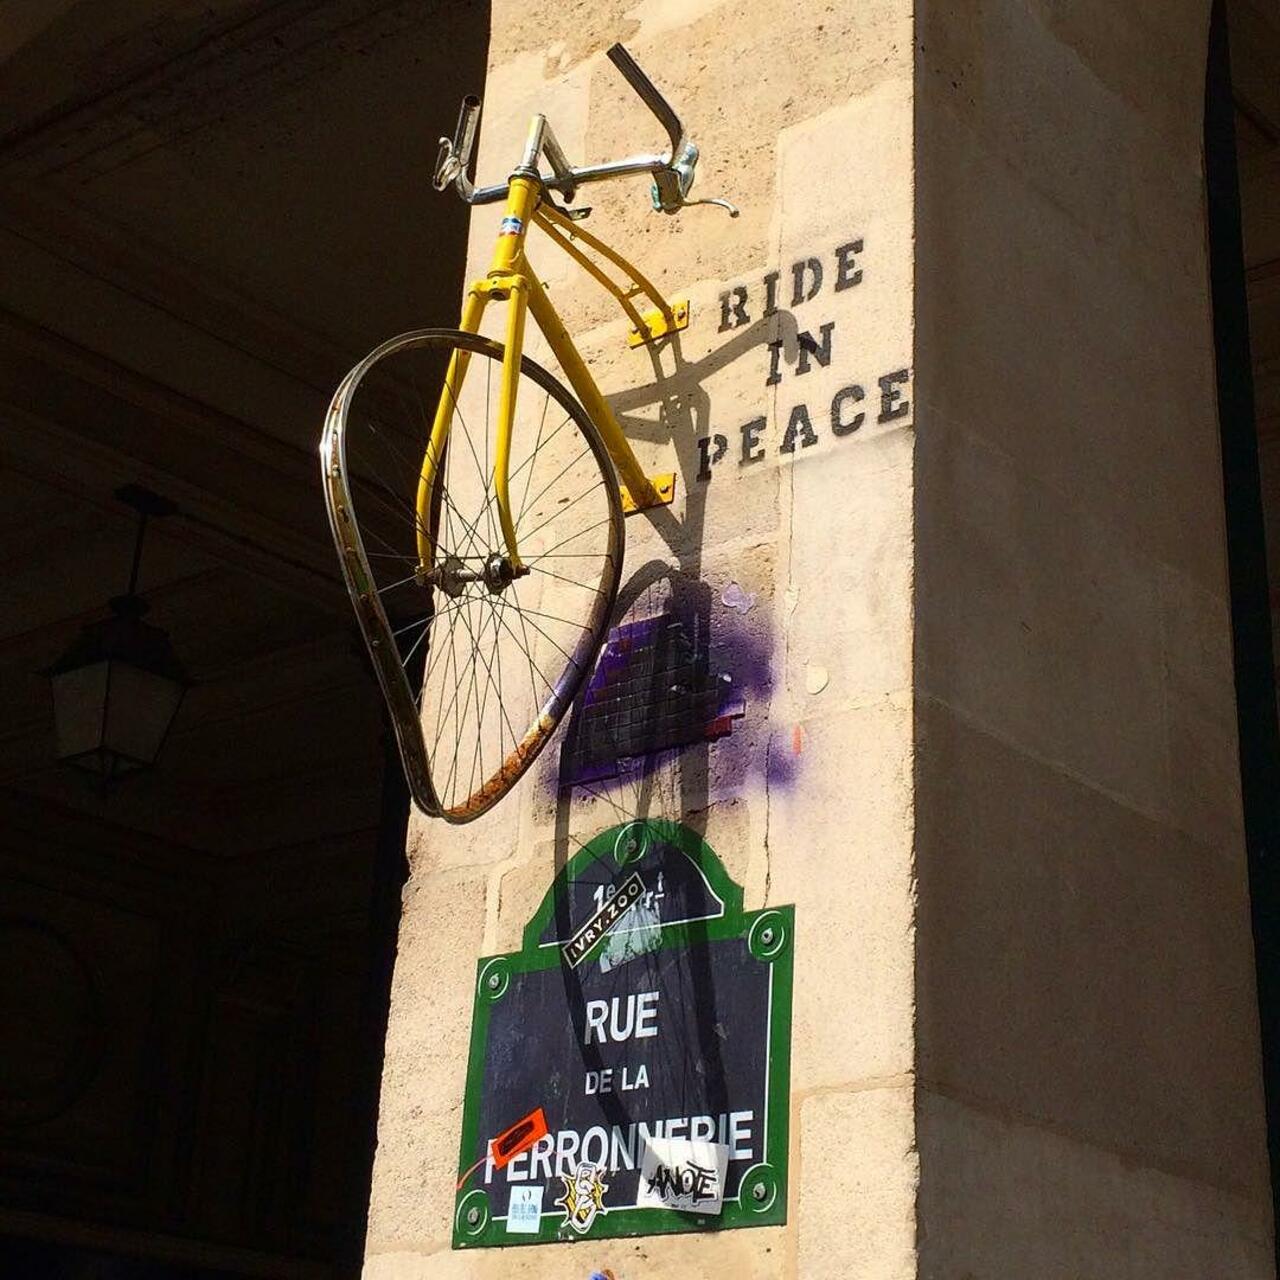 circumjacent_fr: #Paris #graffiti photo by tear27 http://ift.tt/1Vk0xXu #StreetArt http://t.co/NyCsbd17fD